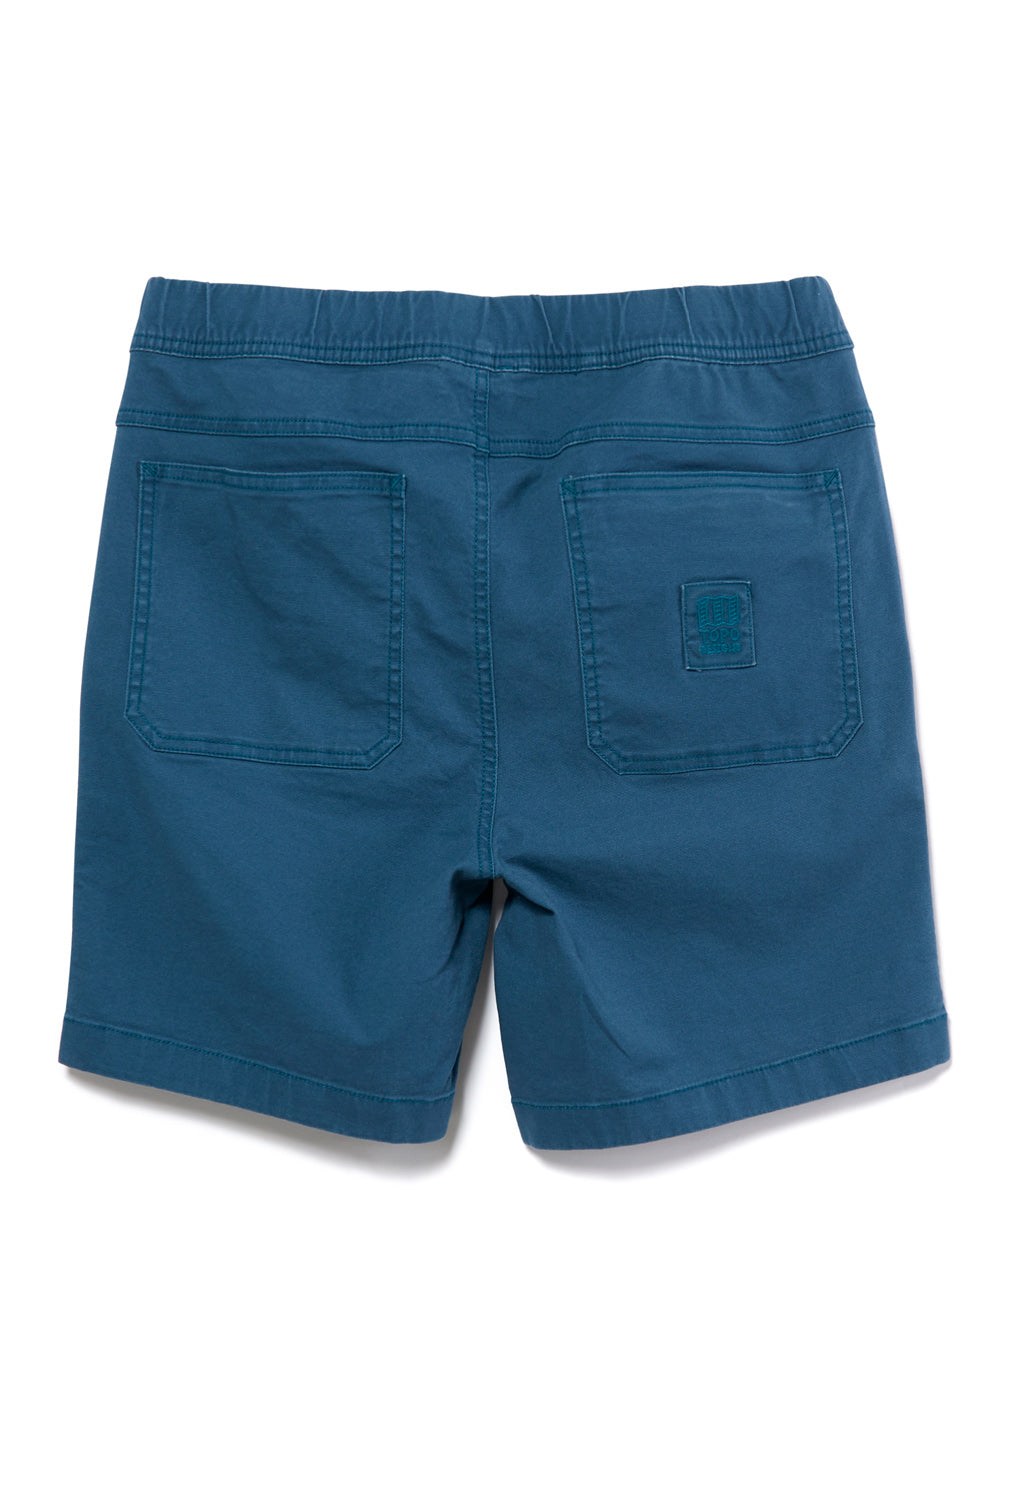 Topo Designs Men's Dirt Shorts - Pond Blue